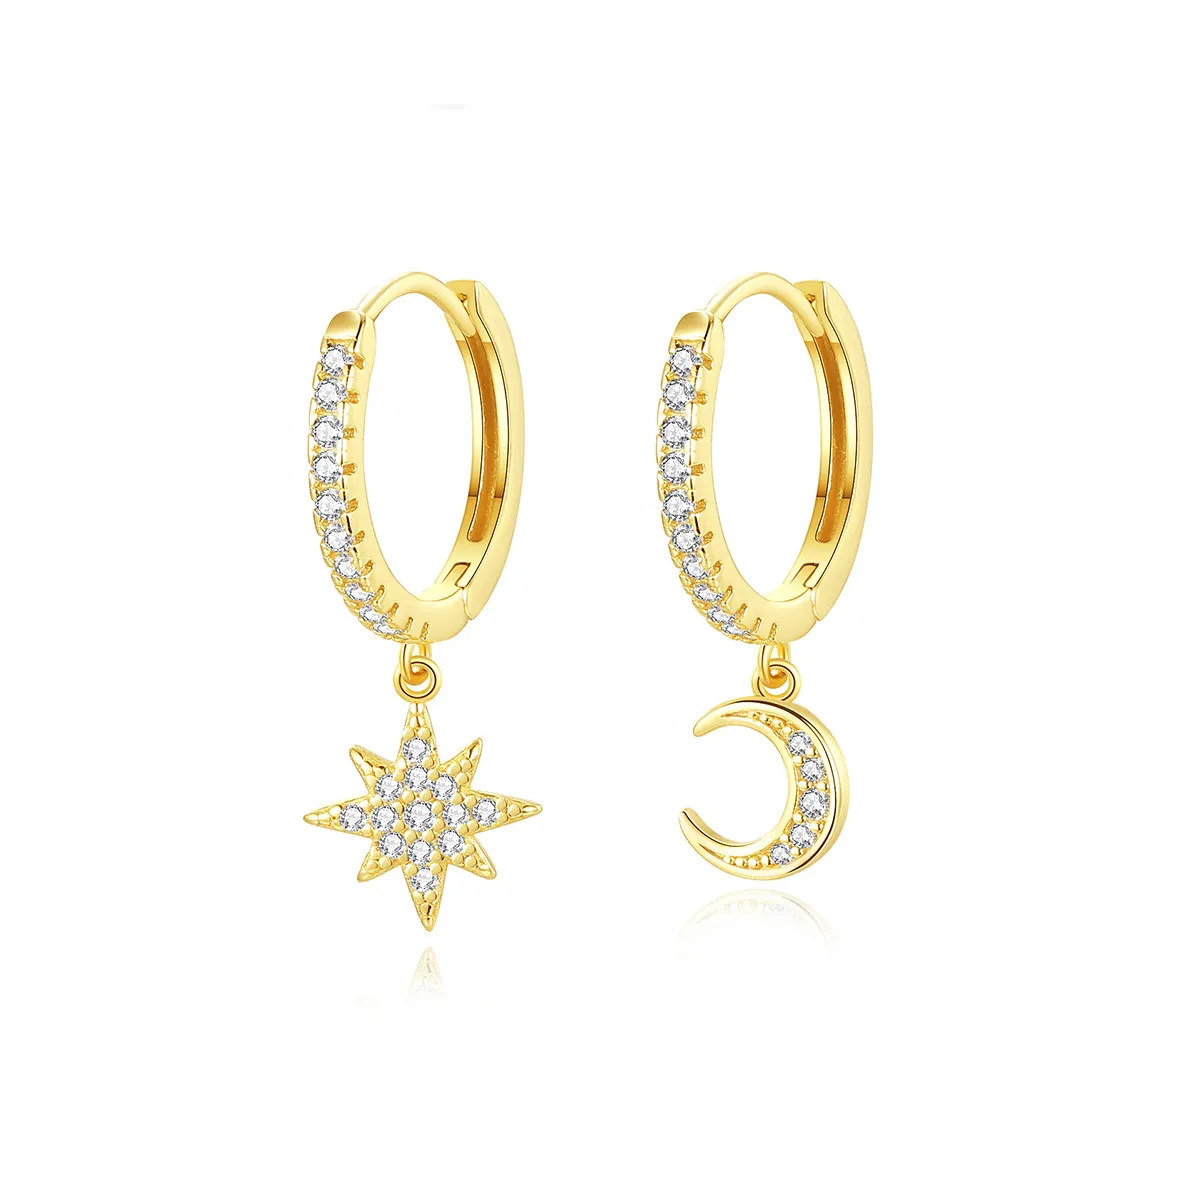 New fashion ear jewelry 925 sterling silver charm dangle drop asymmetric star and moon hoop earrings